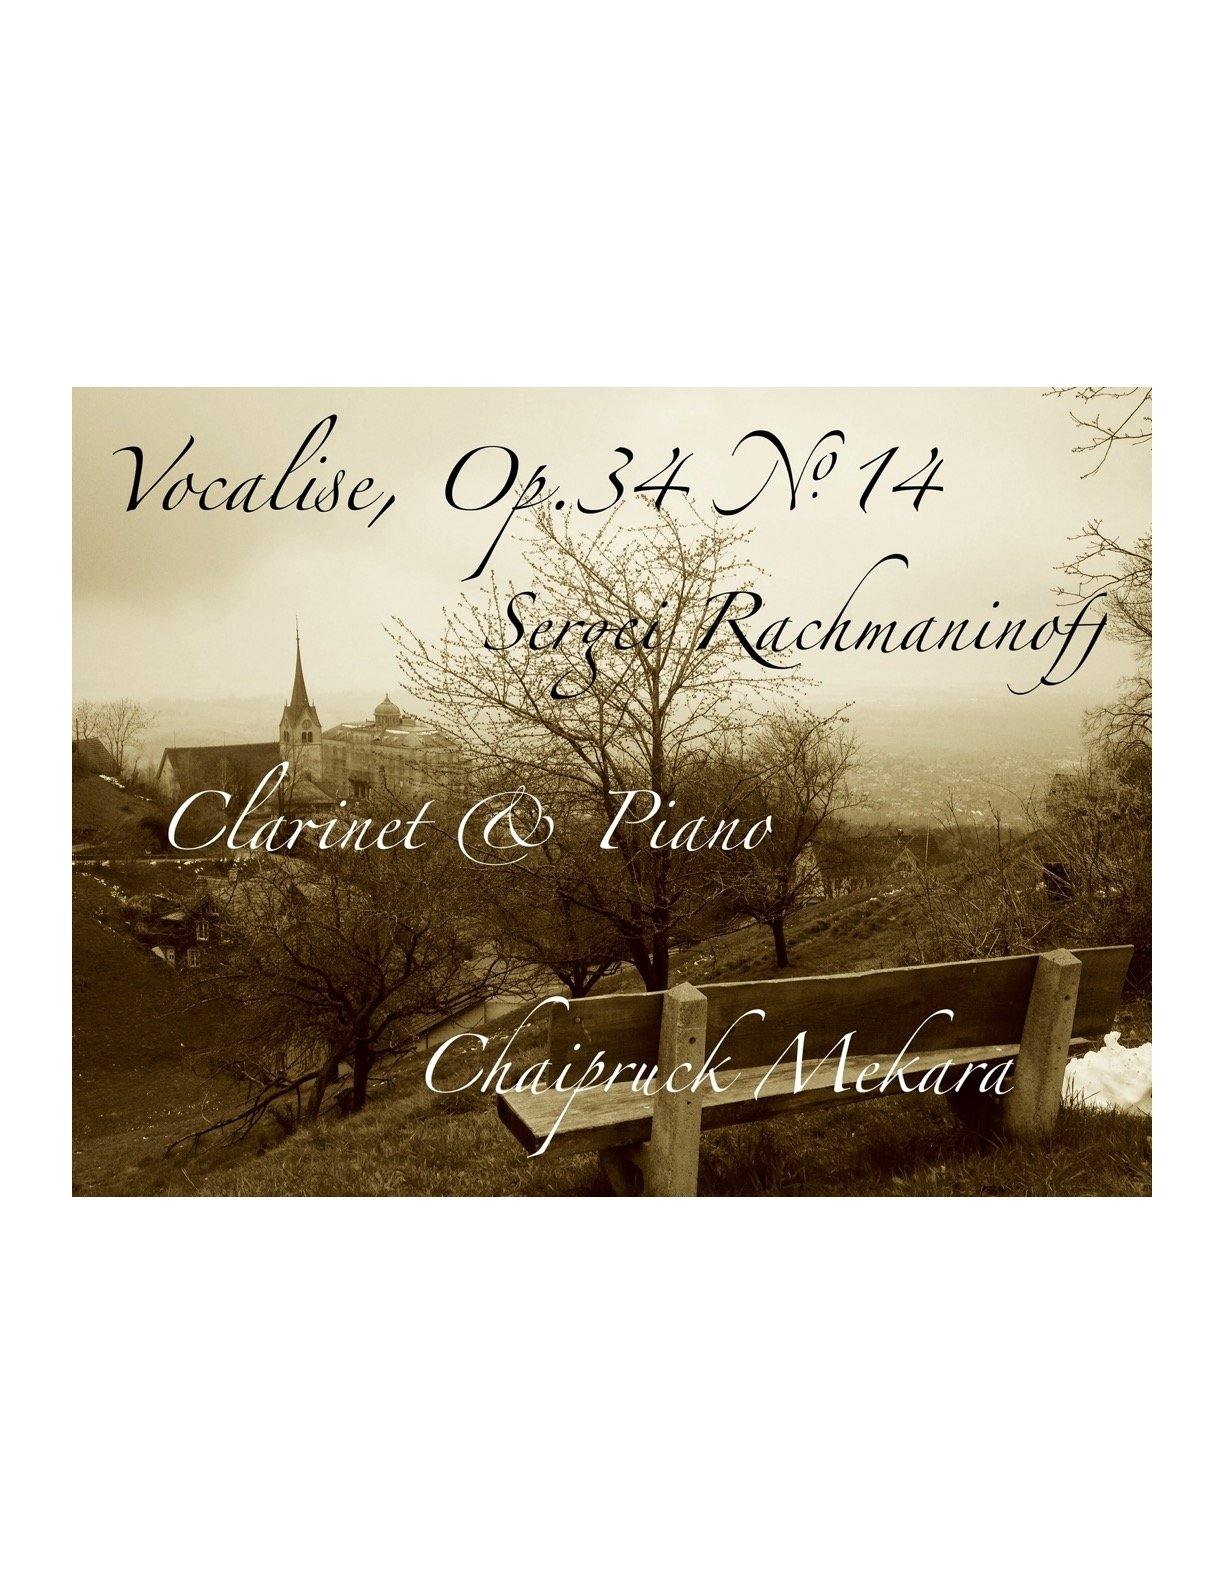 Vocalise, Op. 34 no.14- Sergei Rachmaninoff:  Clarinet and Piano (Score+Part+Mp3) - ChaipruckMekara